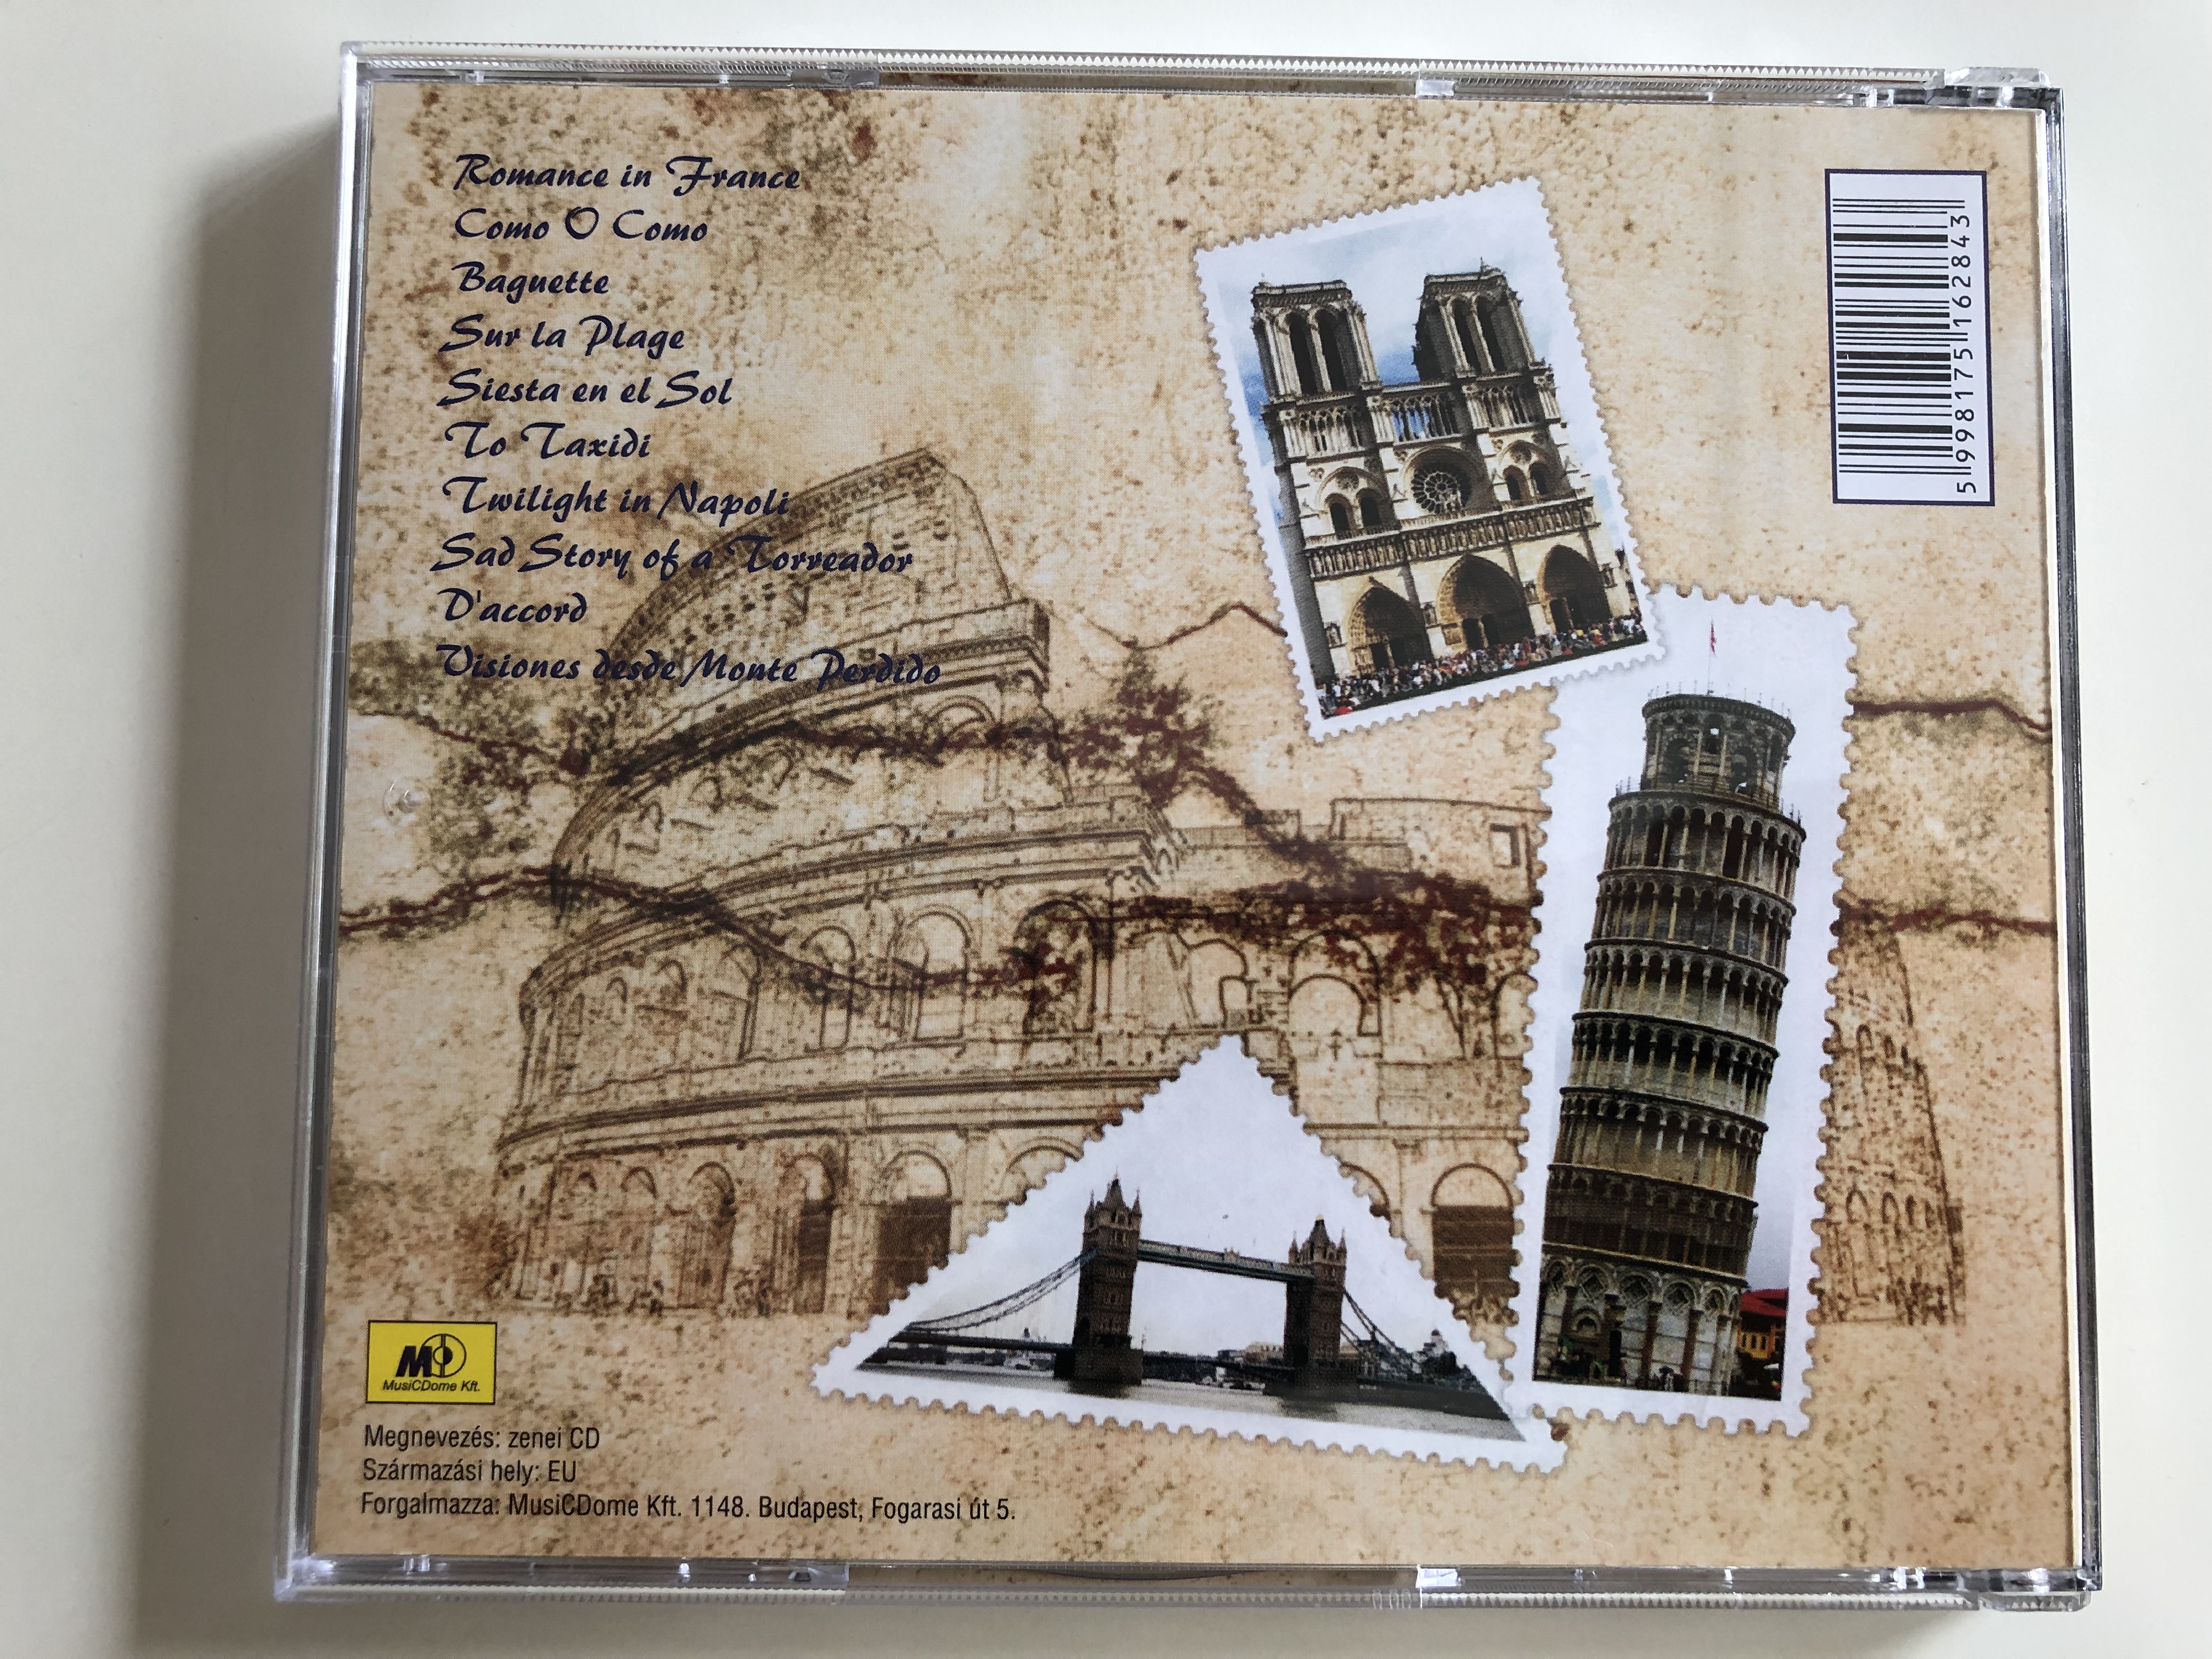 europa-az-ezerarcu-franciaorszag-olaszorszag-spanyolorszag-musicdome-kft.-audio-cd-0742mcd-4-.jpg